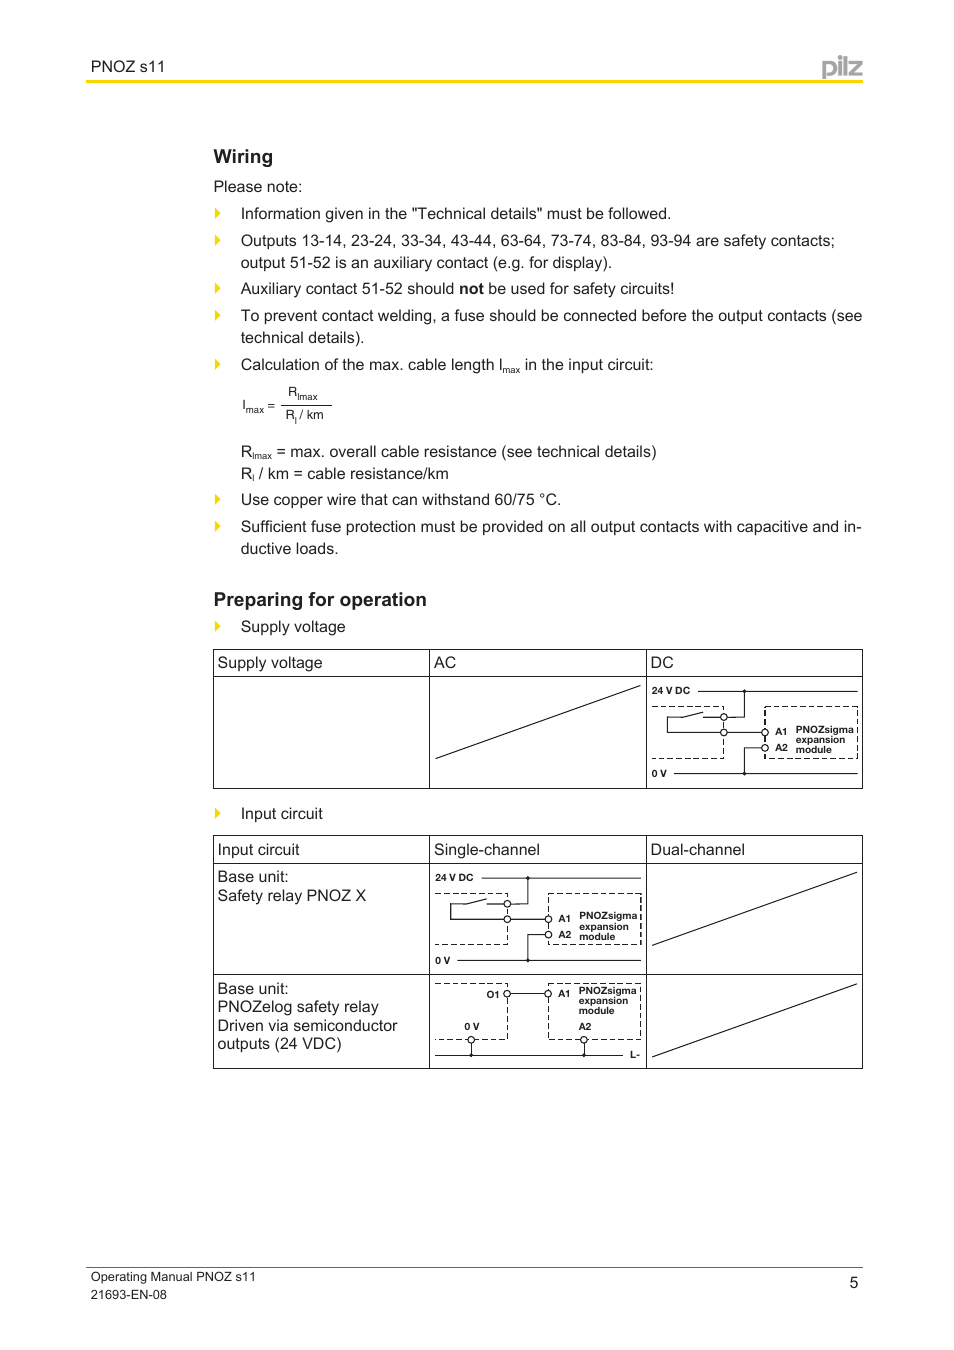 Wiring, Preparing for operation | Pilz PNOZ s11 C 24VDC 8 n/o 1 n/c User  Manual | Page 5 / 13 | Original mode